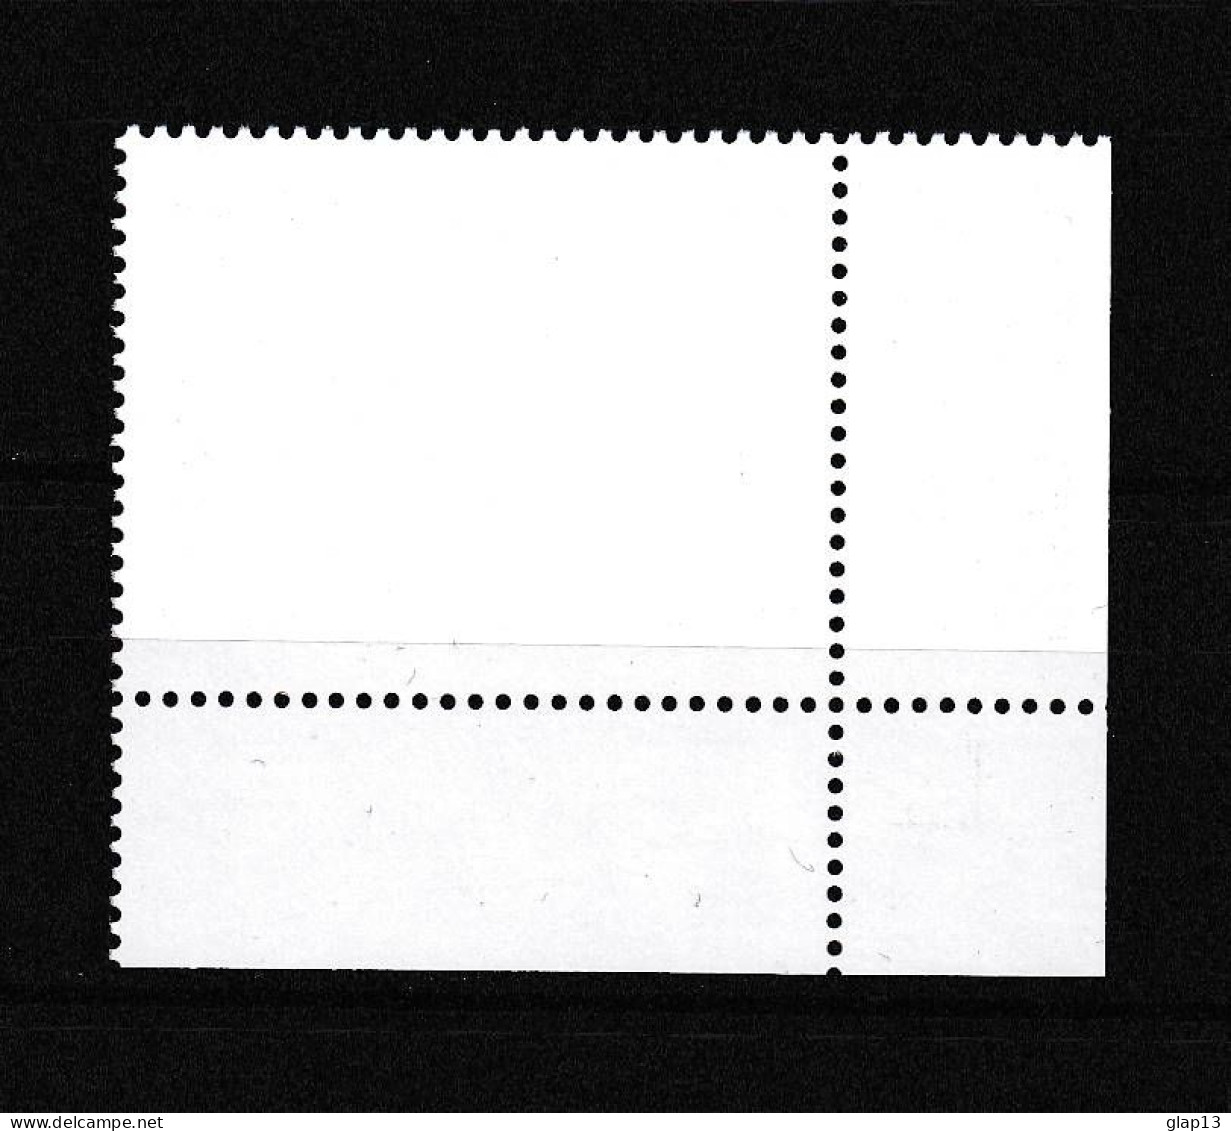 MONACO 2020 TIMBRE N°3243 NEUF** TORIGNI - Unused Stamps